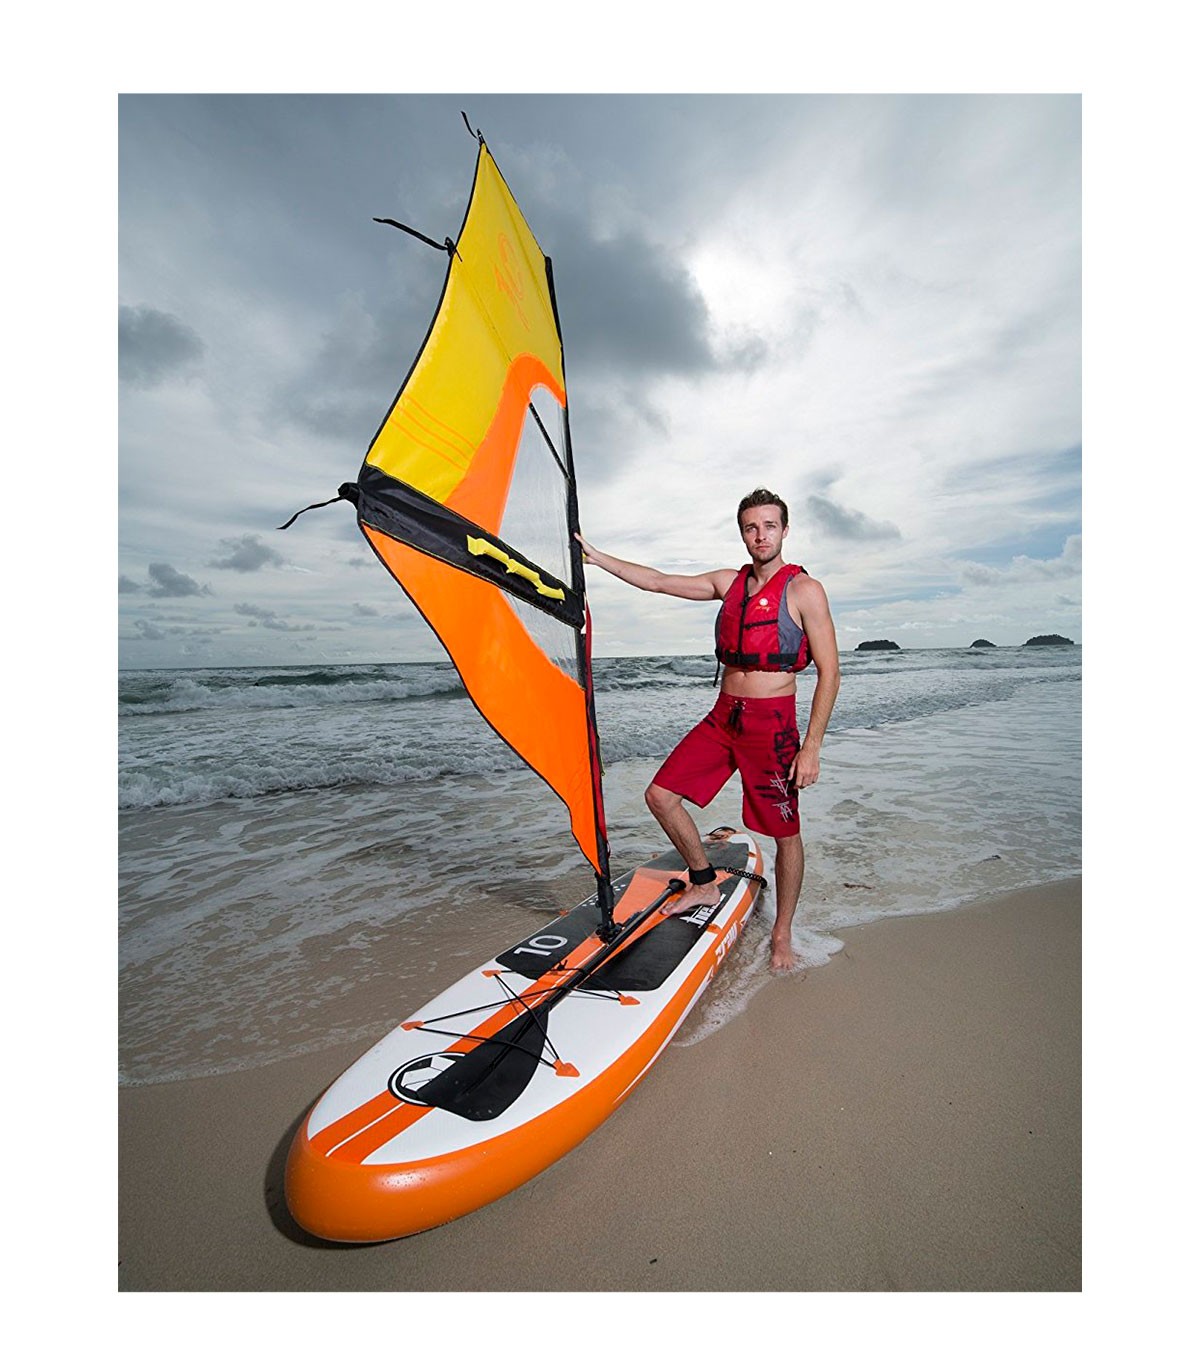 Tabla Paddle Surf Hinchable Zray Windsurf 10' - Dimensiones: 305 X 81,3 Cm  MKP